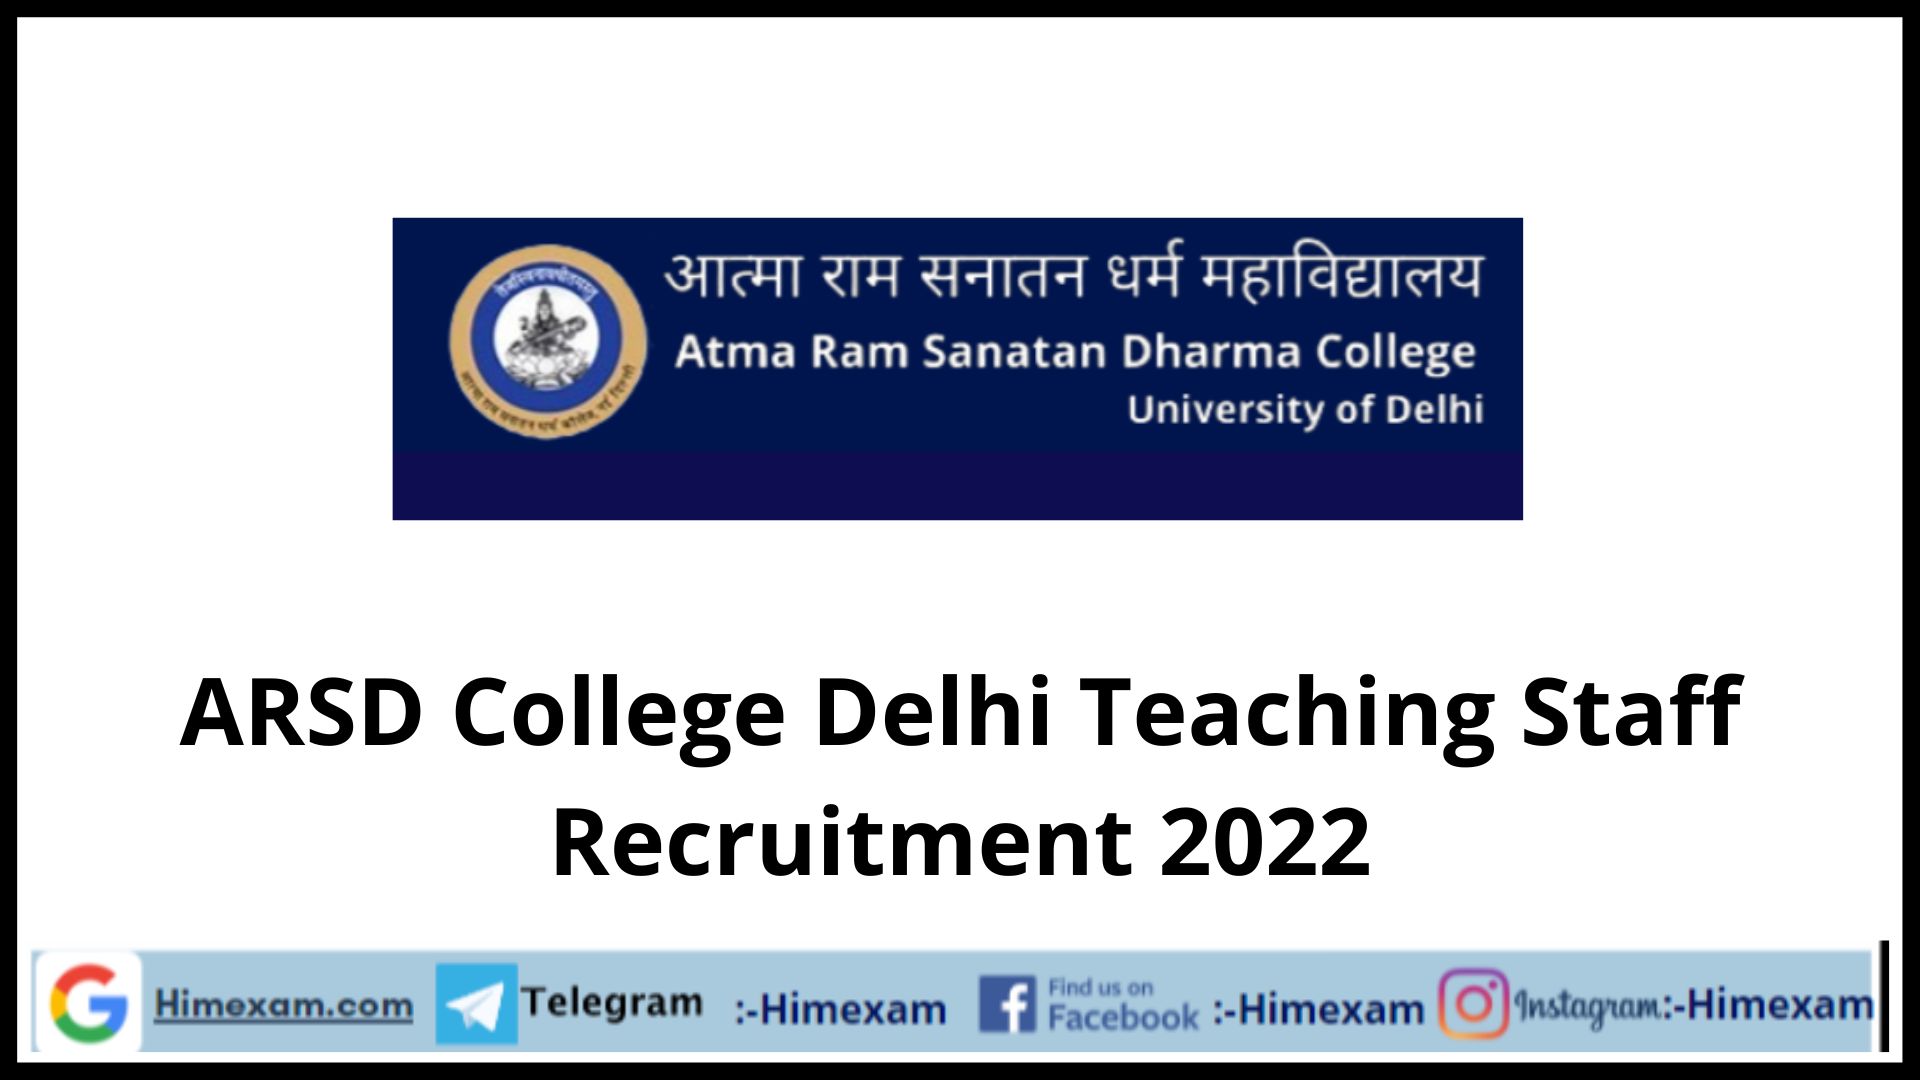 ARSD College Delhi Teaching Staff Recruitment 2022